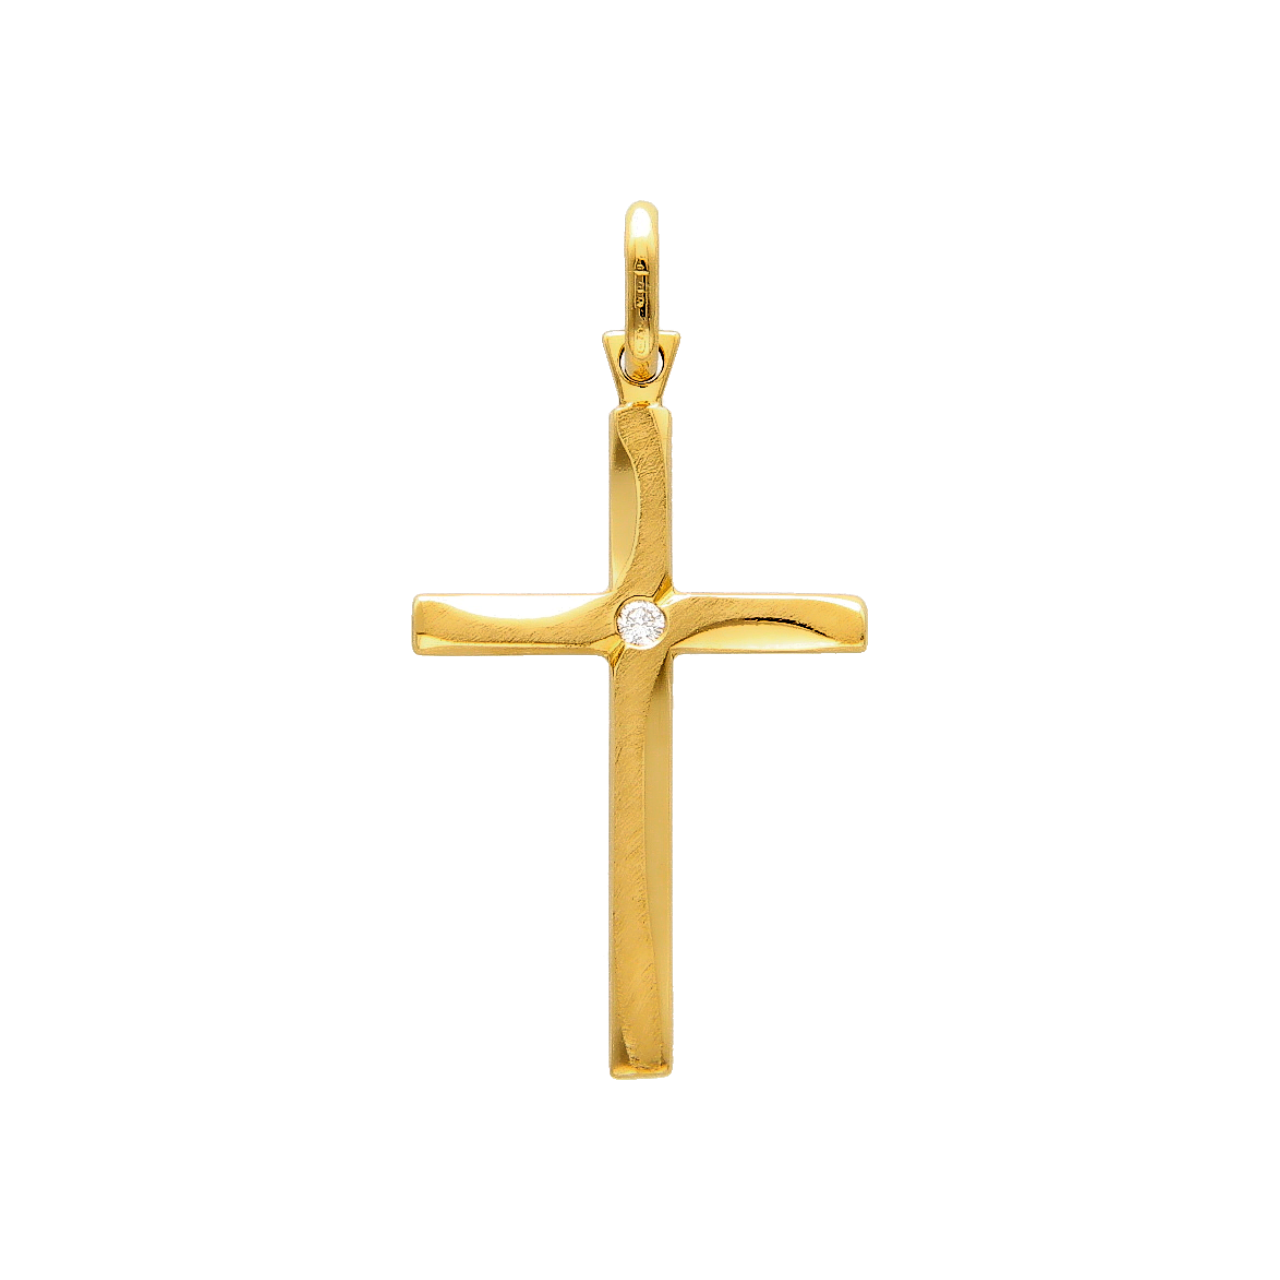 Yellow gold cross pendant with 0.05 ct. diamond